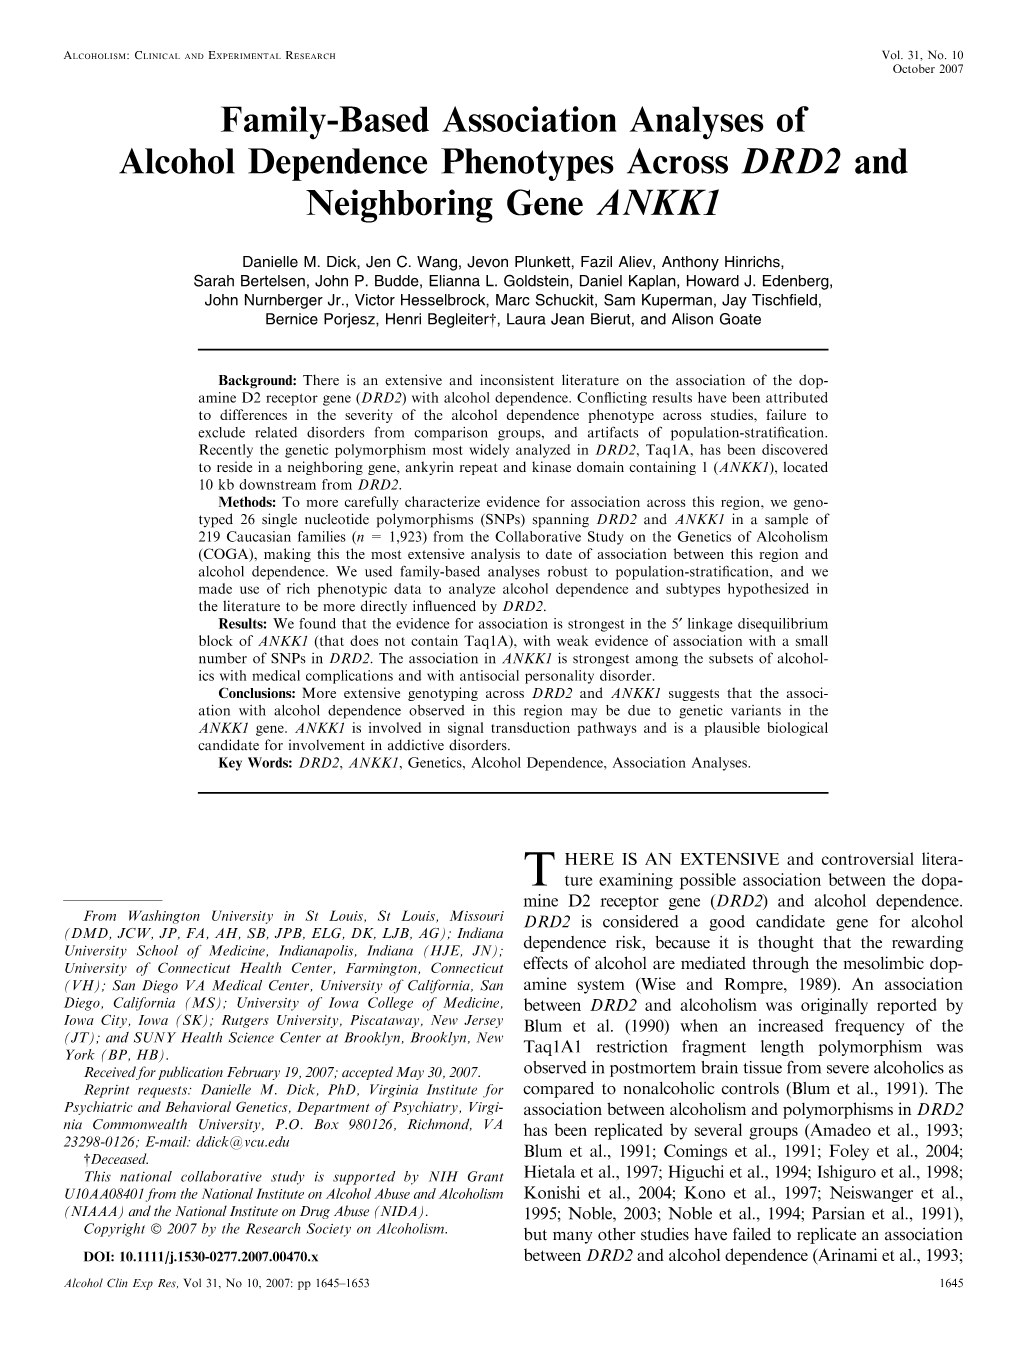 Family-Based Association Analyses of Alcohol Dependence Phenotypes Across DRD2 and Neighboring Gene ANKK1